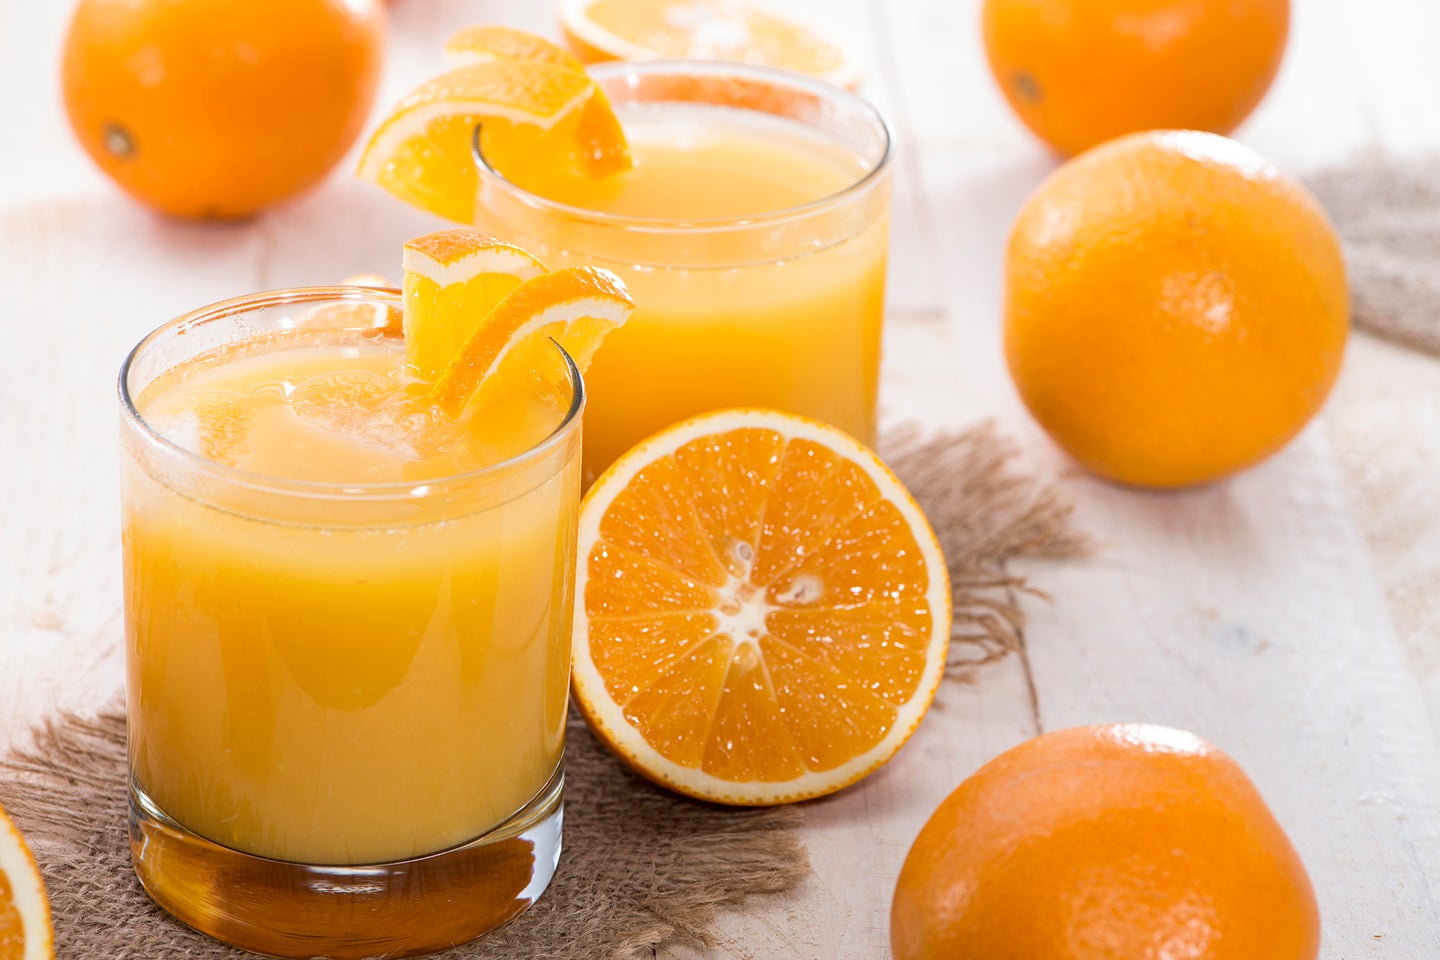 Portion of fresh made Orange Juice (with fruits)